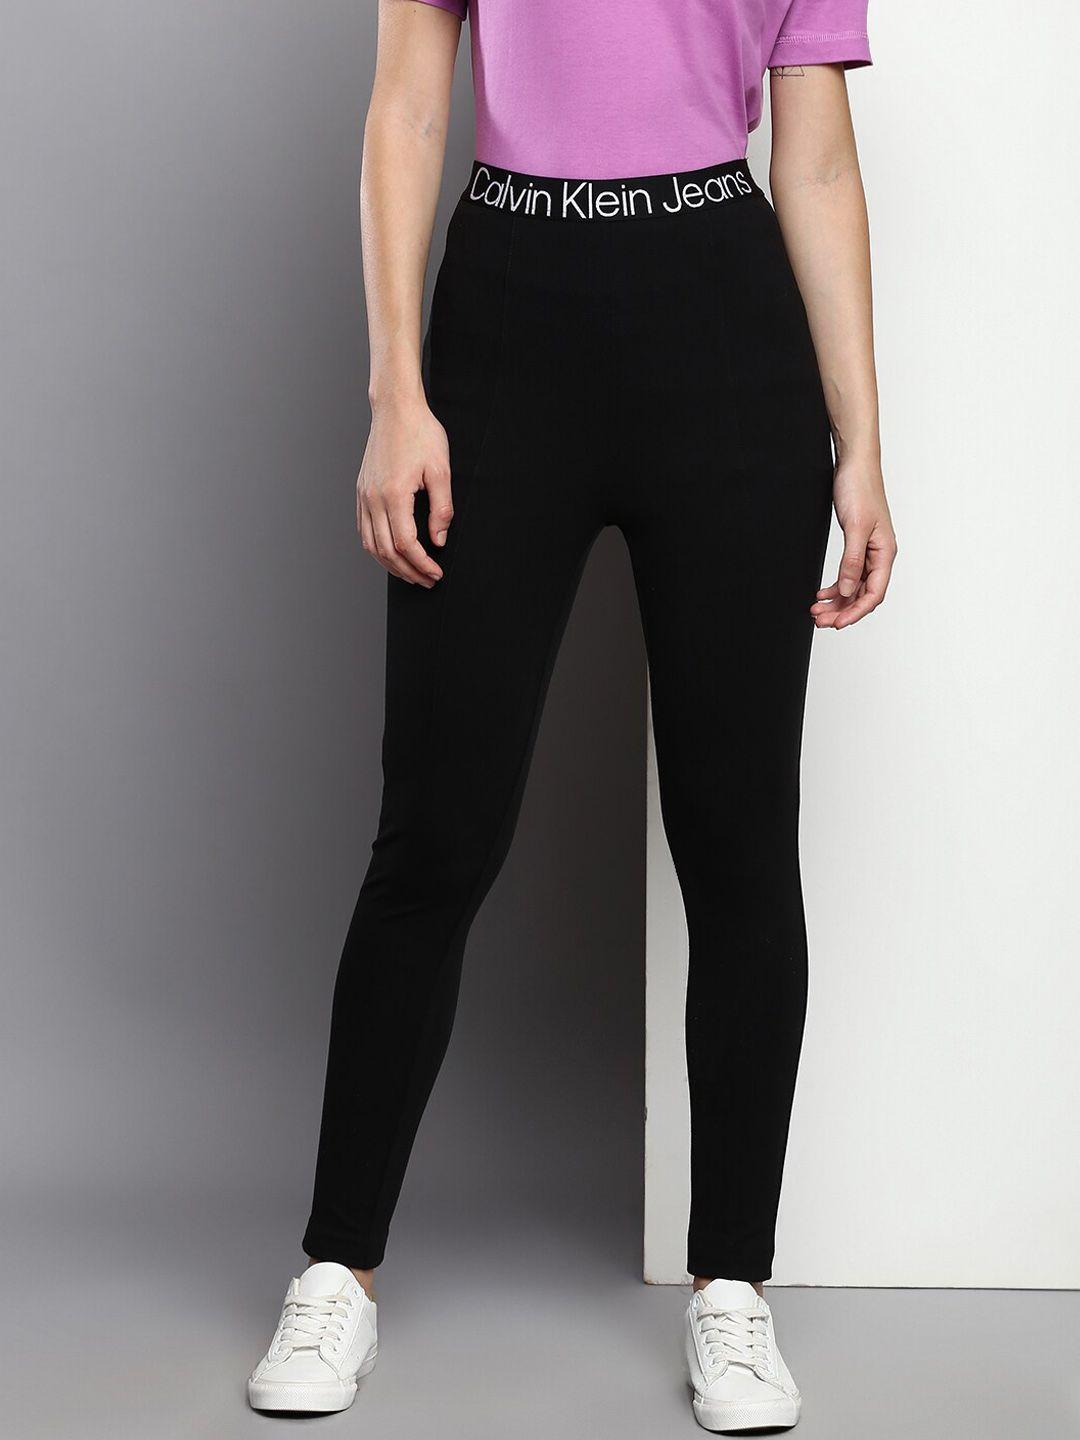 calvin-klein-jeans-women-black-solid-tights